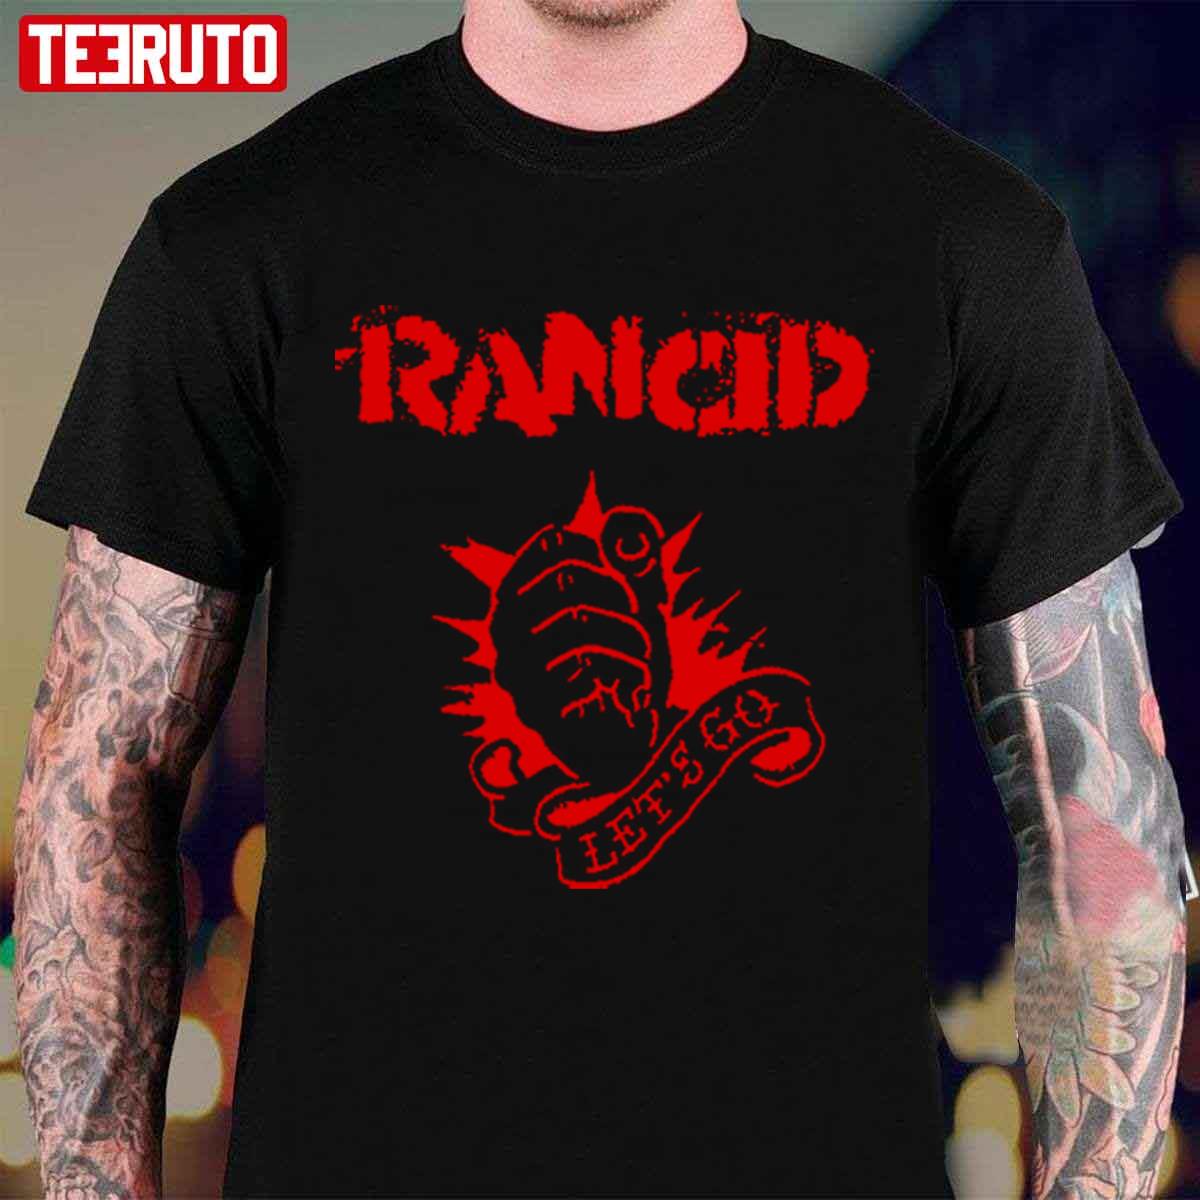 Let's Go Original Of Rancid Artwork Unisex T-shirt